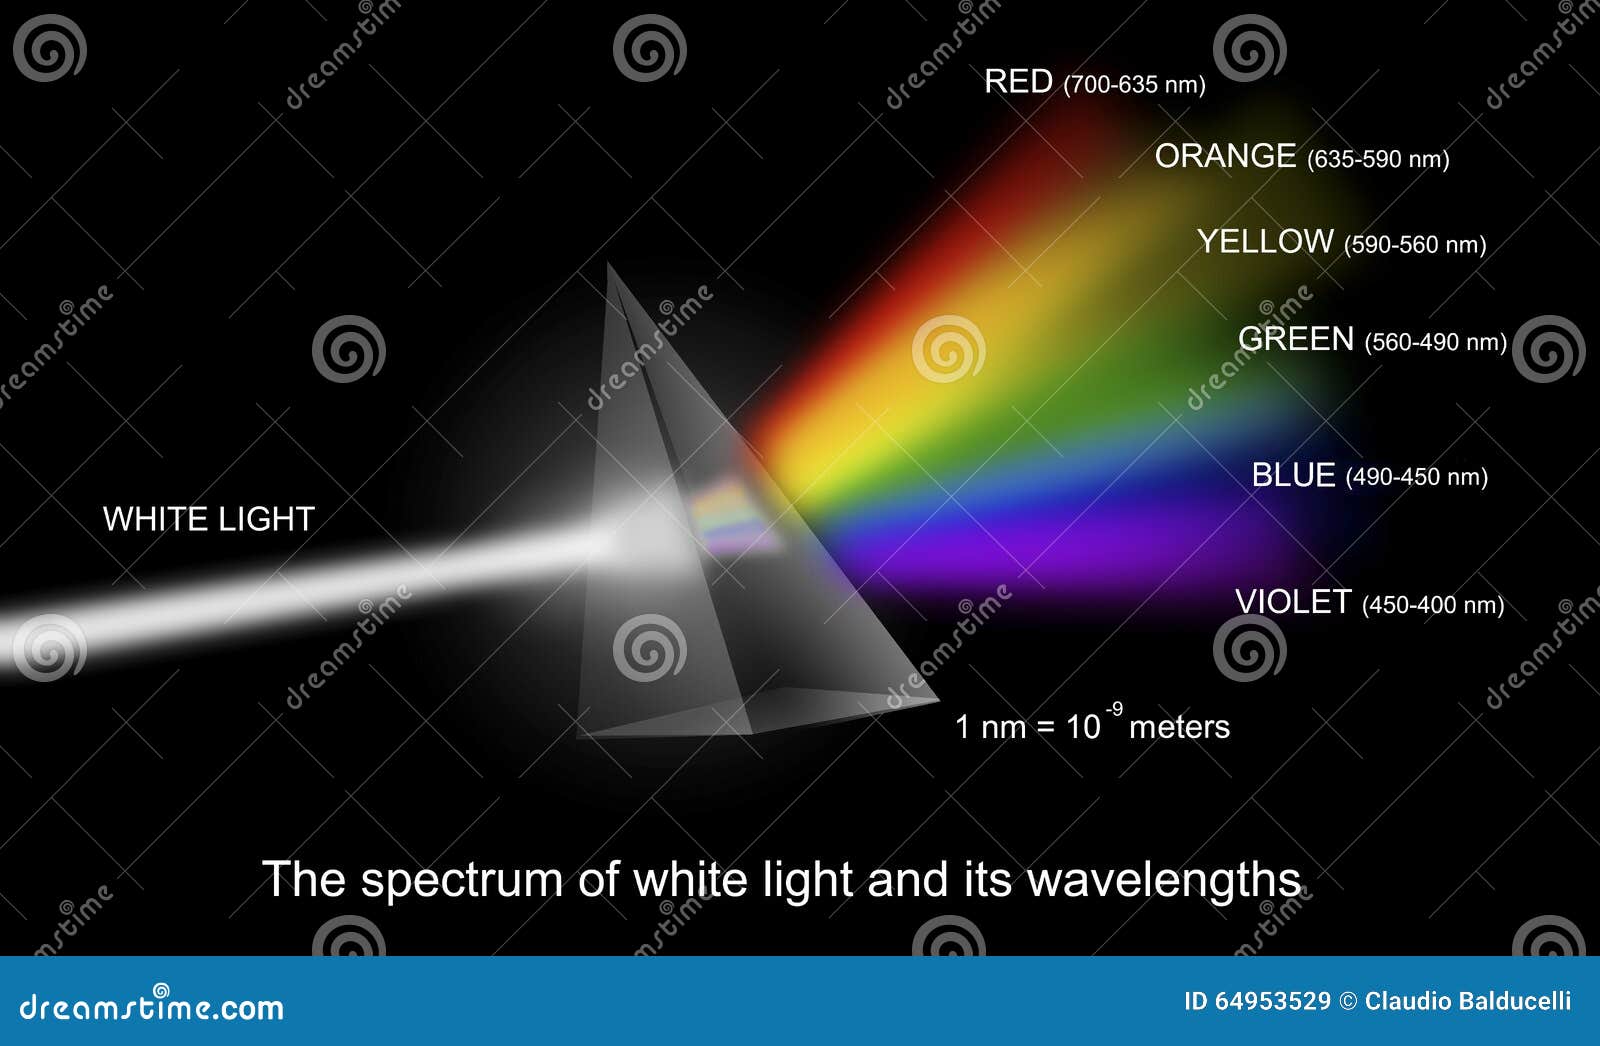 spectrum of white light with wavelengths